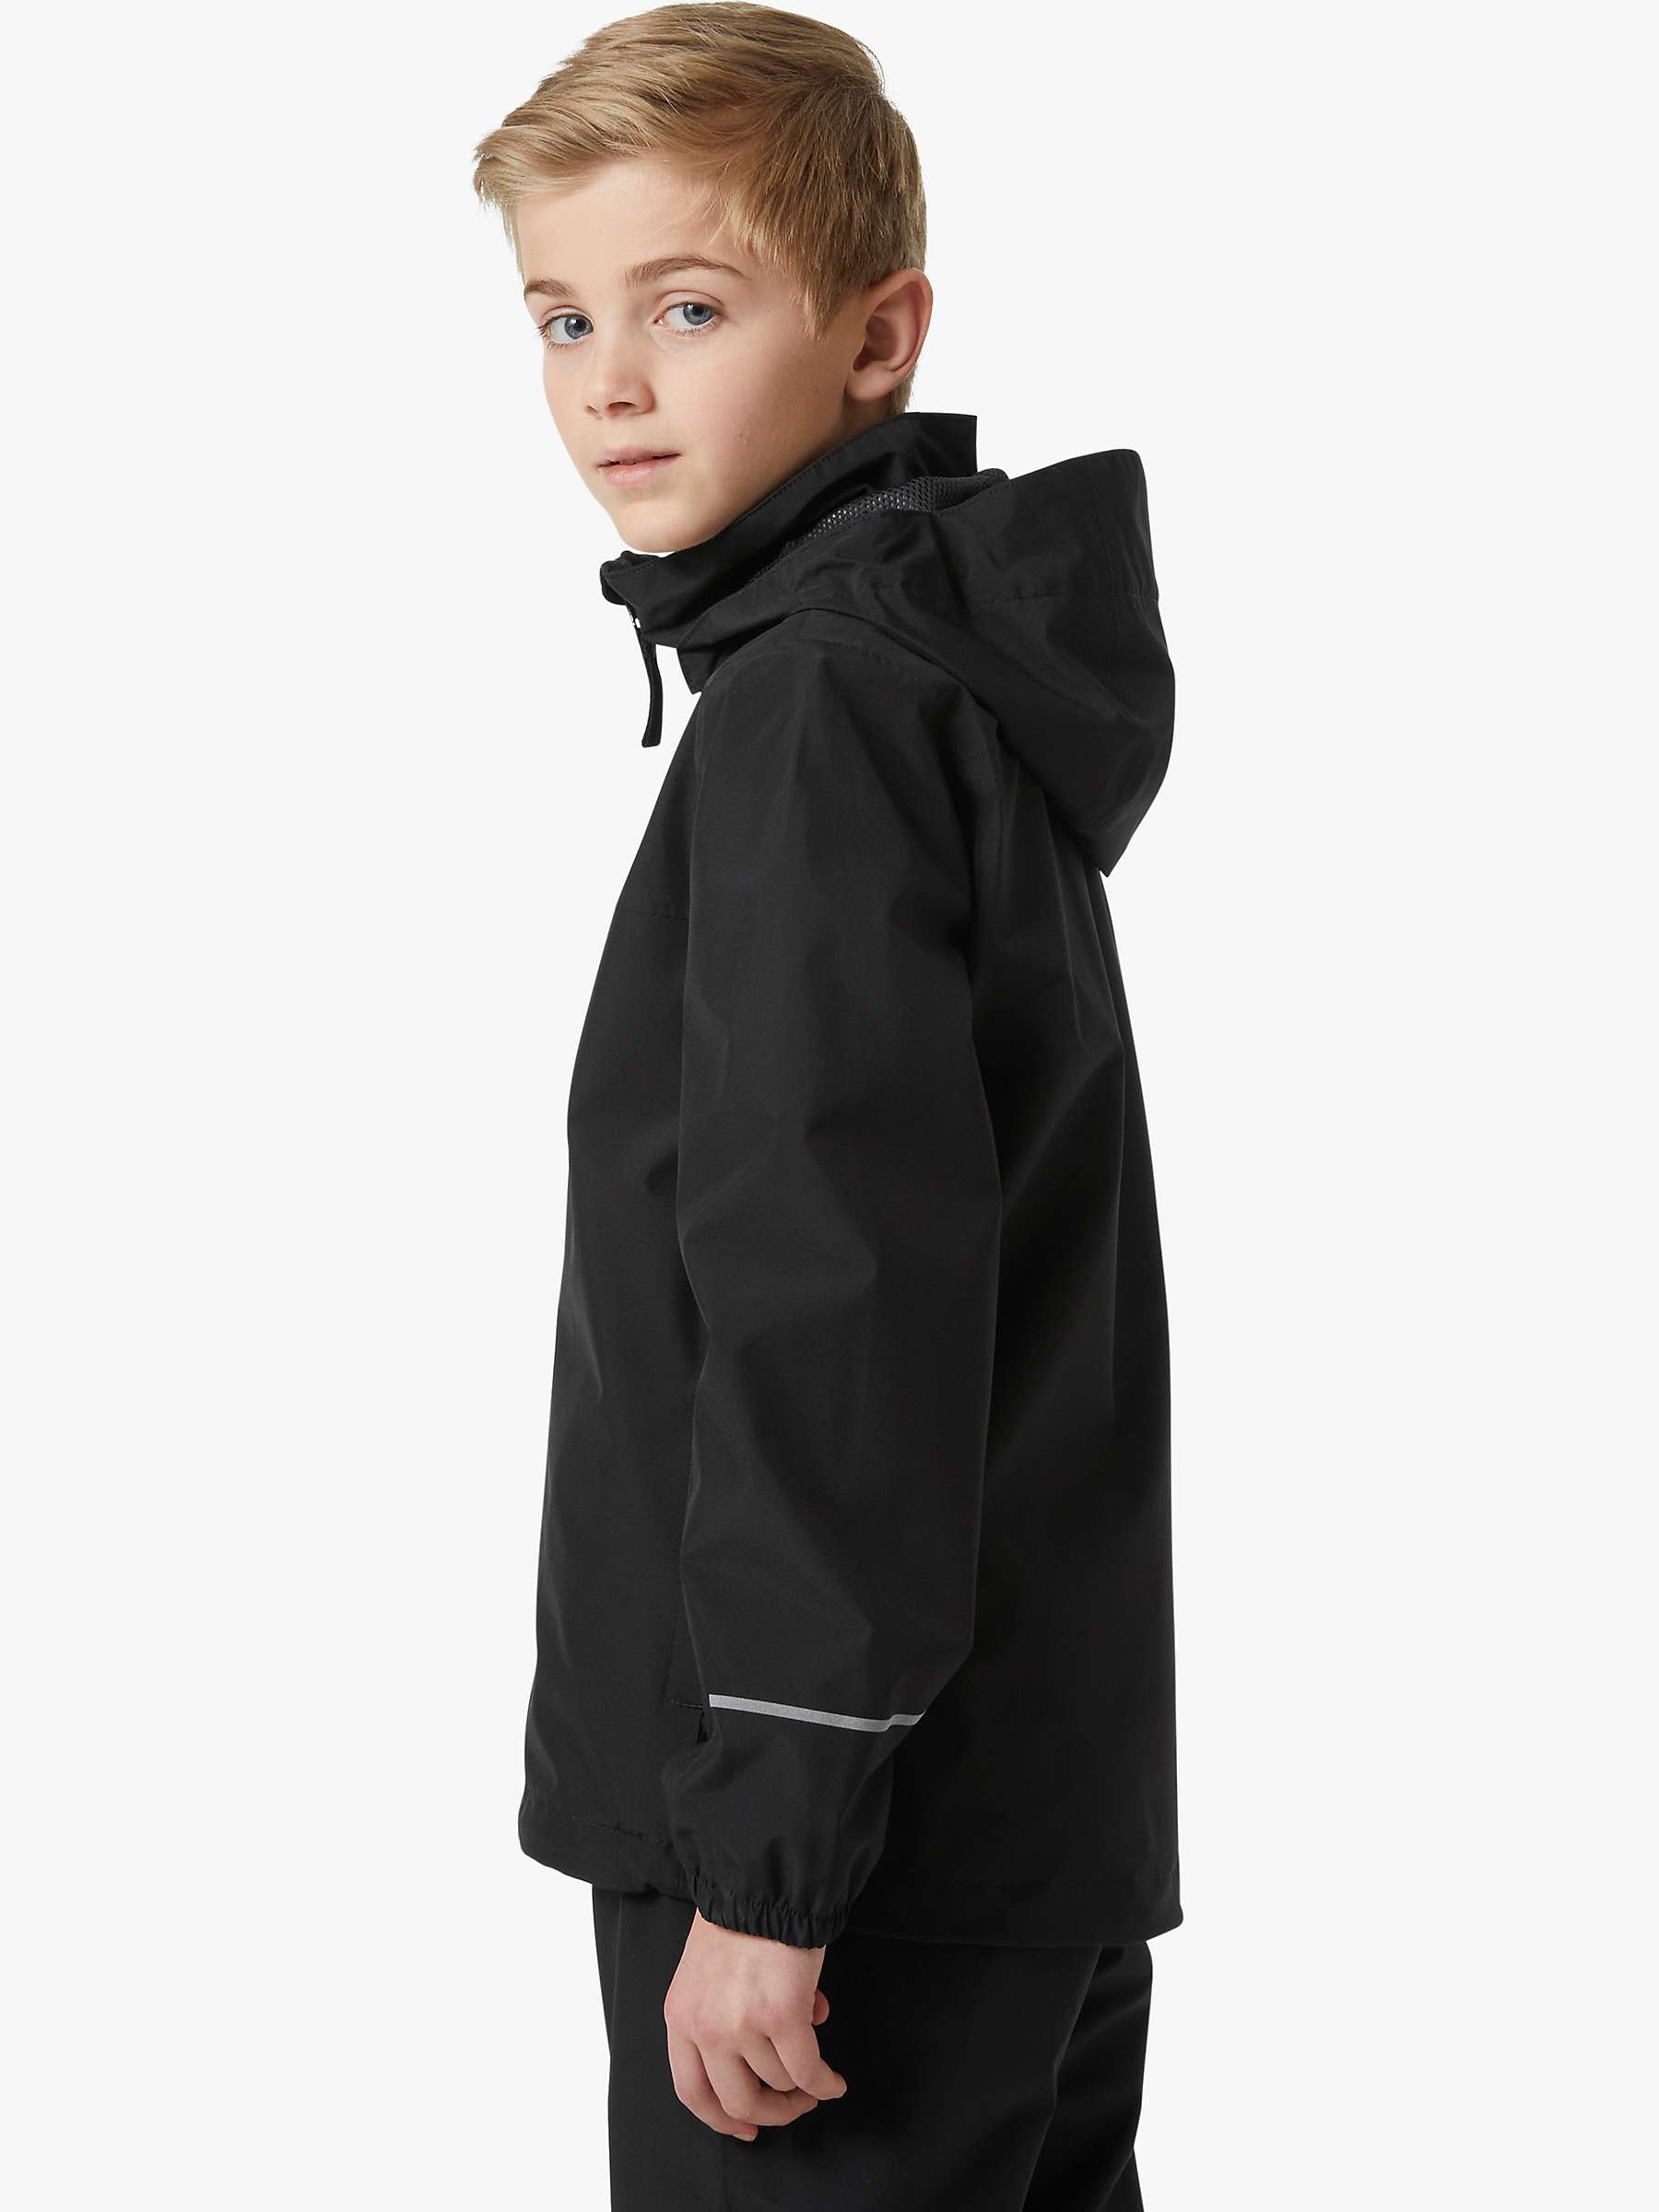 Buy Helly Hansen Kids' Juell Rain Jacket, Black Online at johnlewis.com